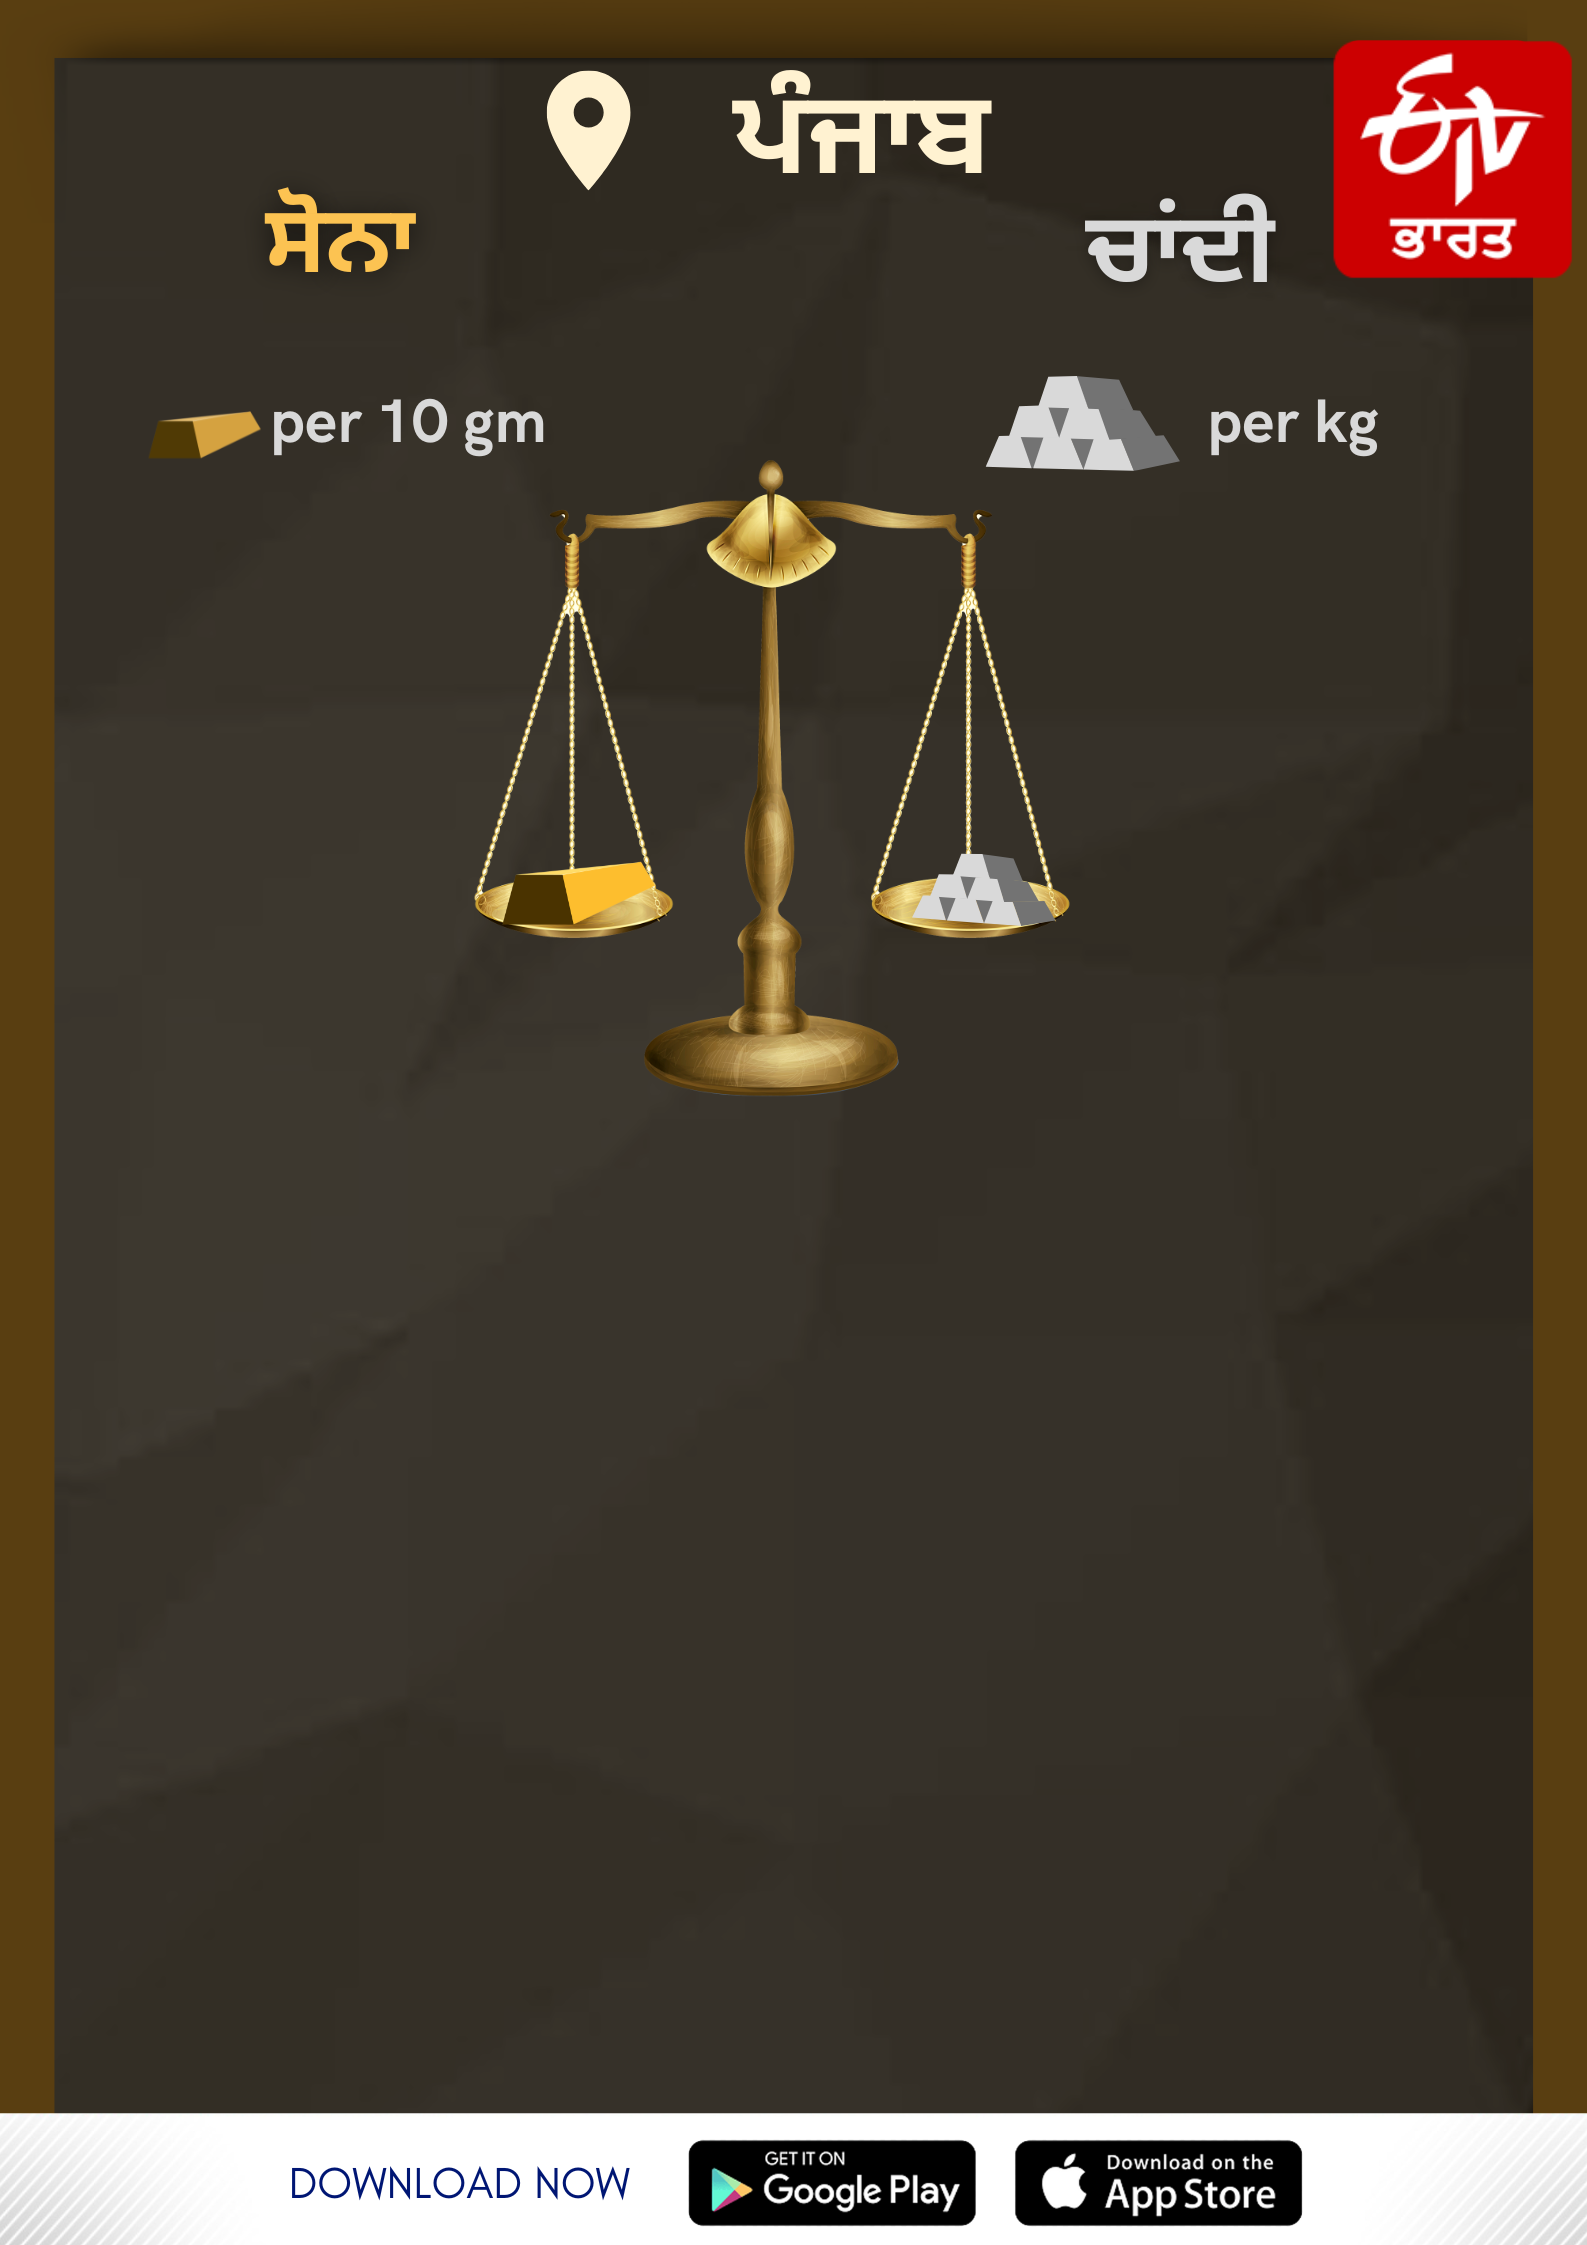 Gold and silver prices In punjab: ਚਾਂਦੀ ਦੇ ਰੇਟ 'ਚ ਹੋਇਆ ਵਾਧਾ, ਜਾਣੋ ਸੋਨੇ ਦਾ ਭਾਅ